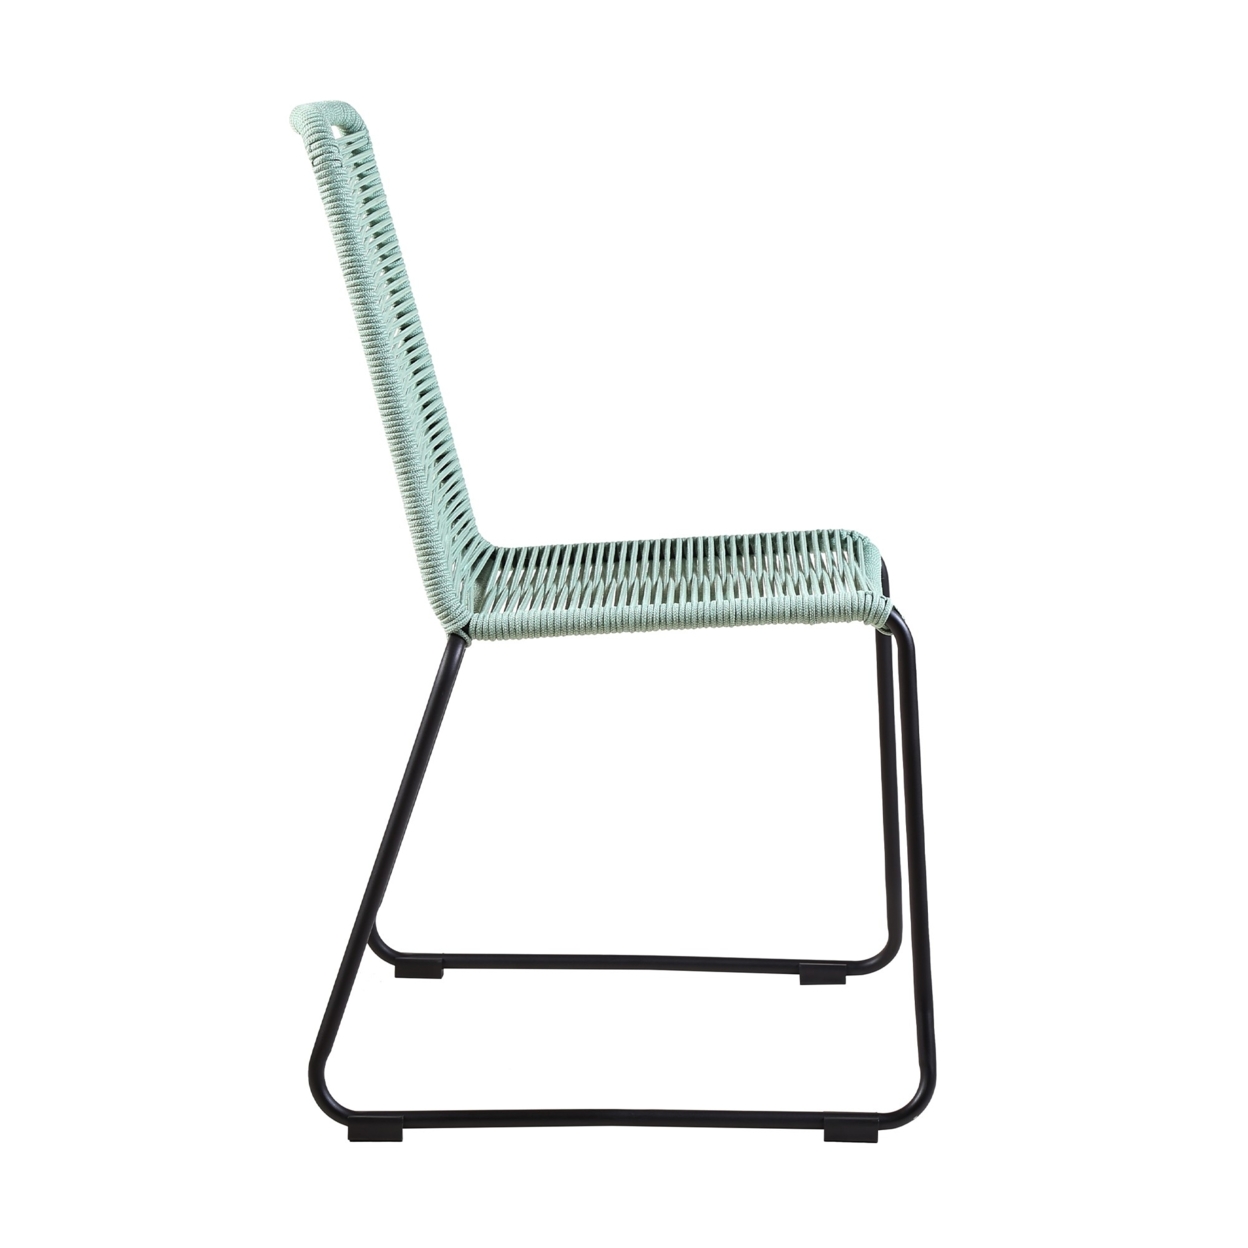 Metal Frame Patio Dining Chair With Fishbone Rope Weaving, Blue- Saltoro Sherpi